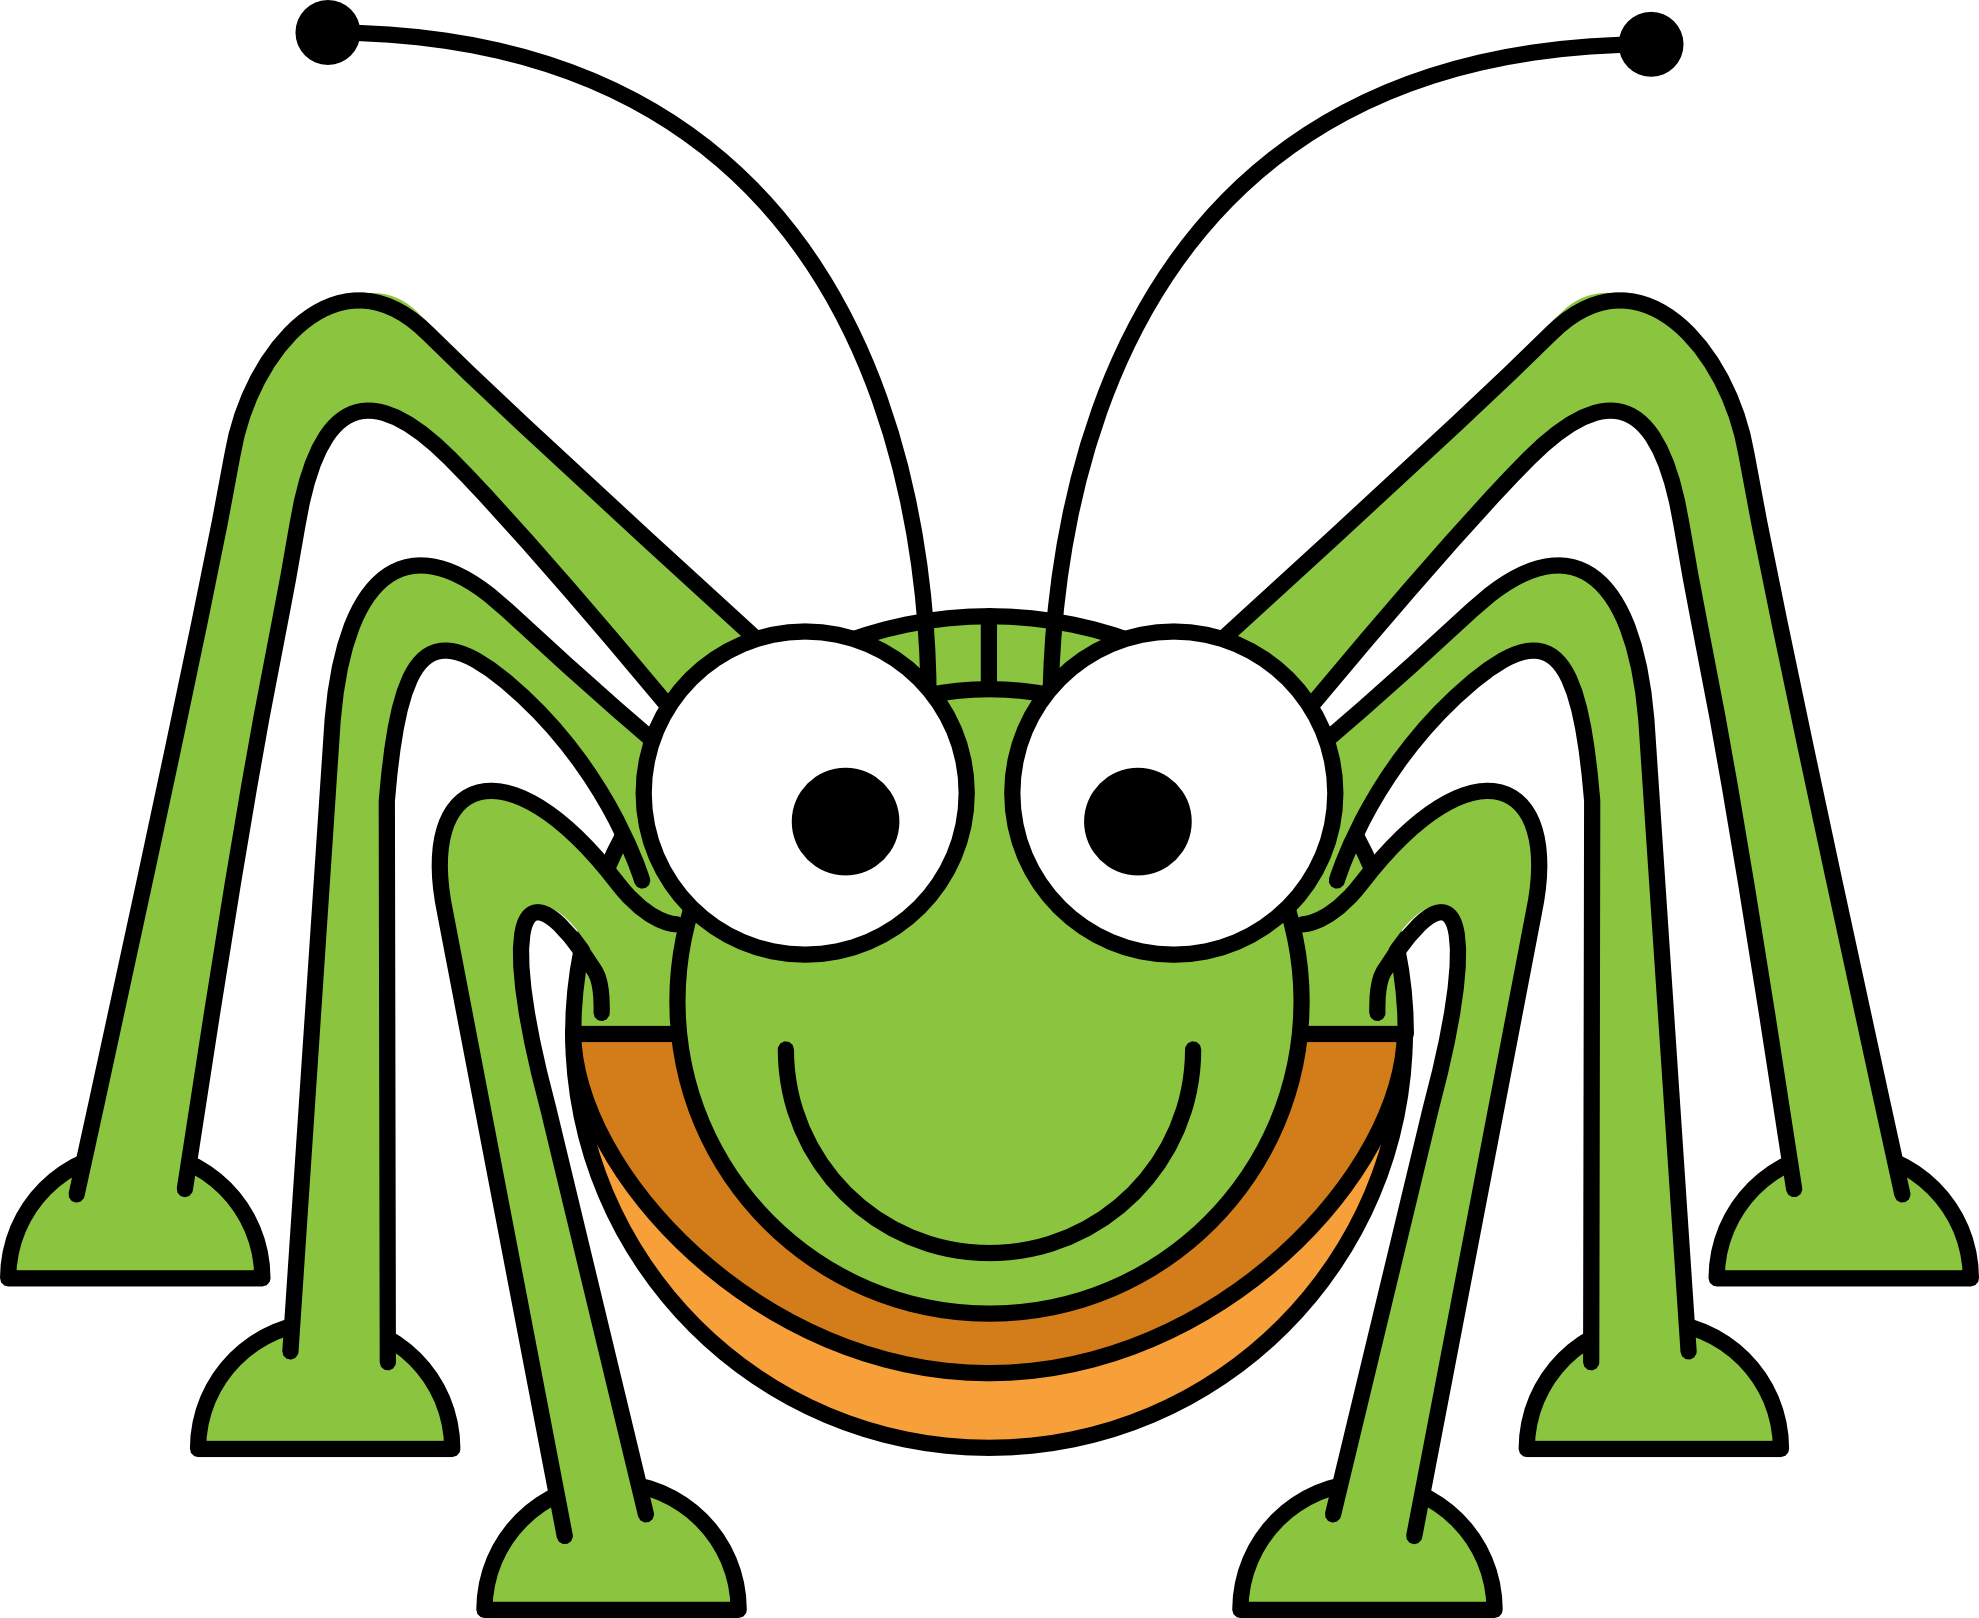 Grasshopper clipart small. Admin cute green spider